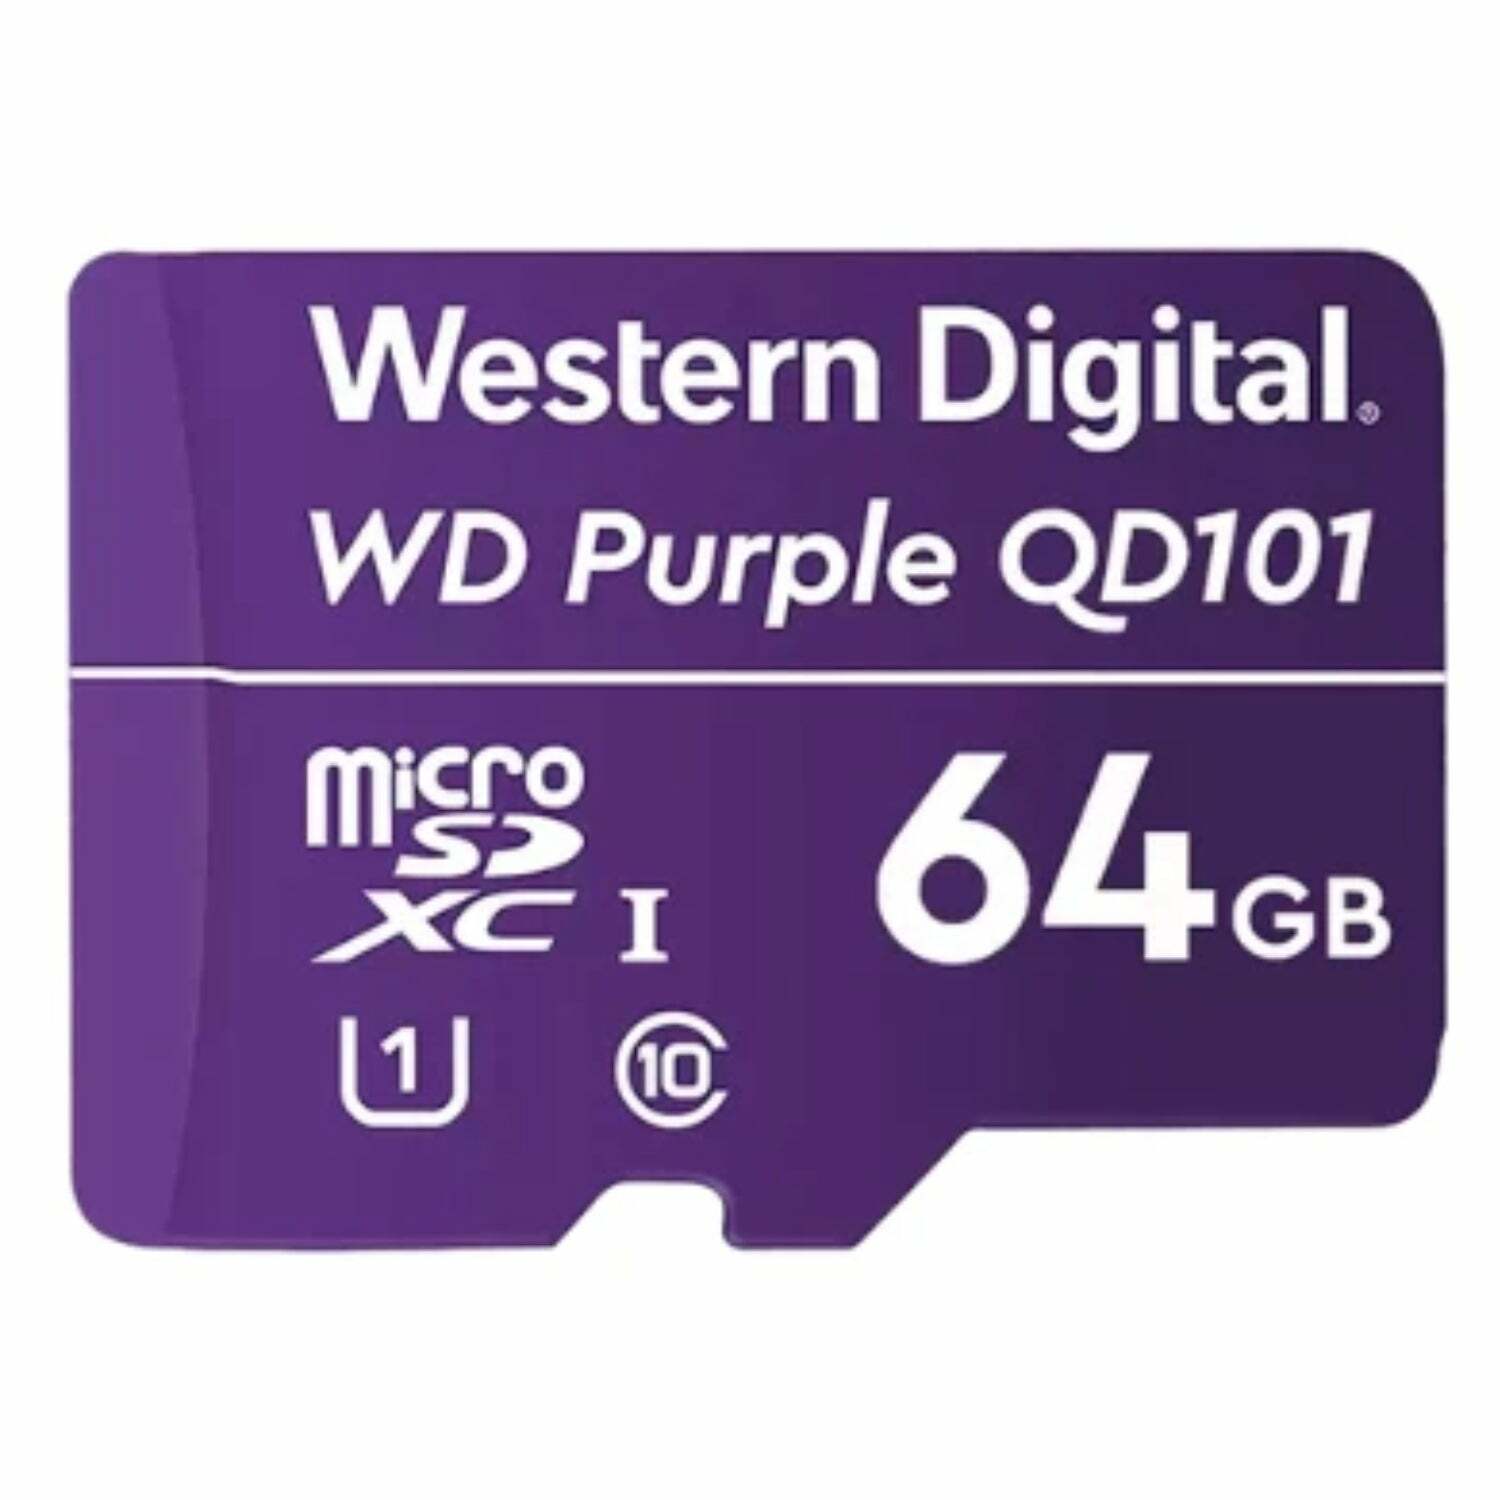 Western Digital Purple 64GB Class 10 microSDXC UHS-I U1 Flash Memory Card